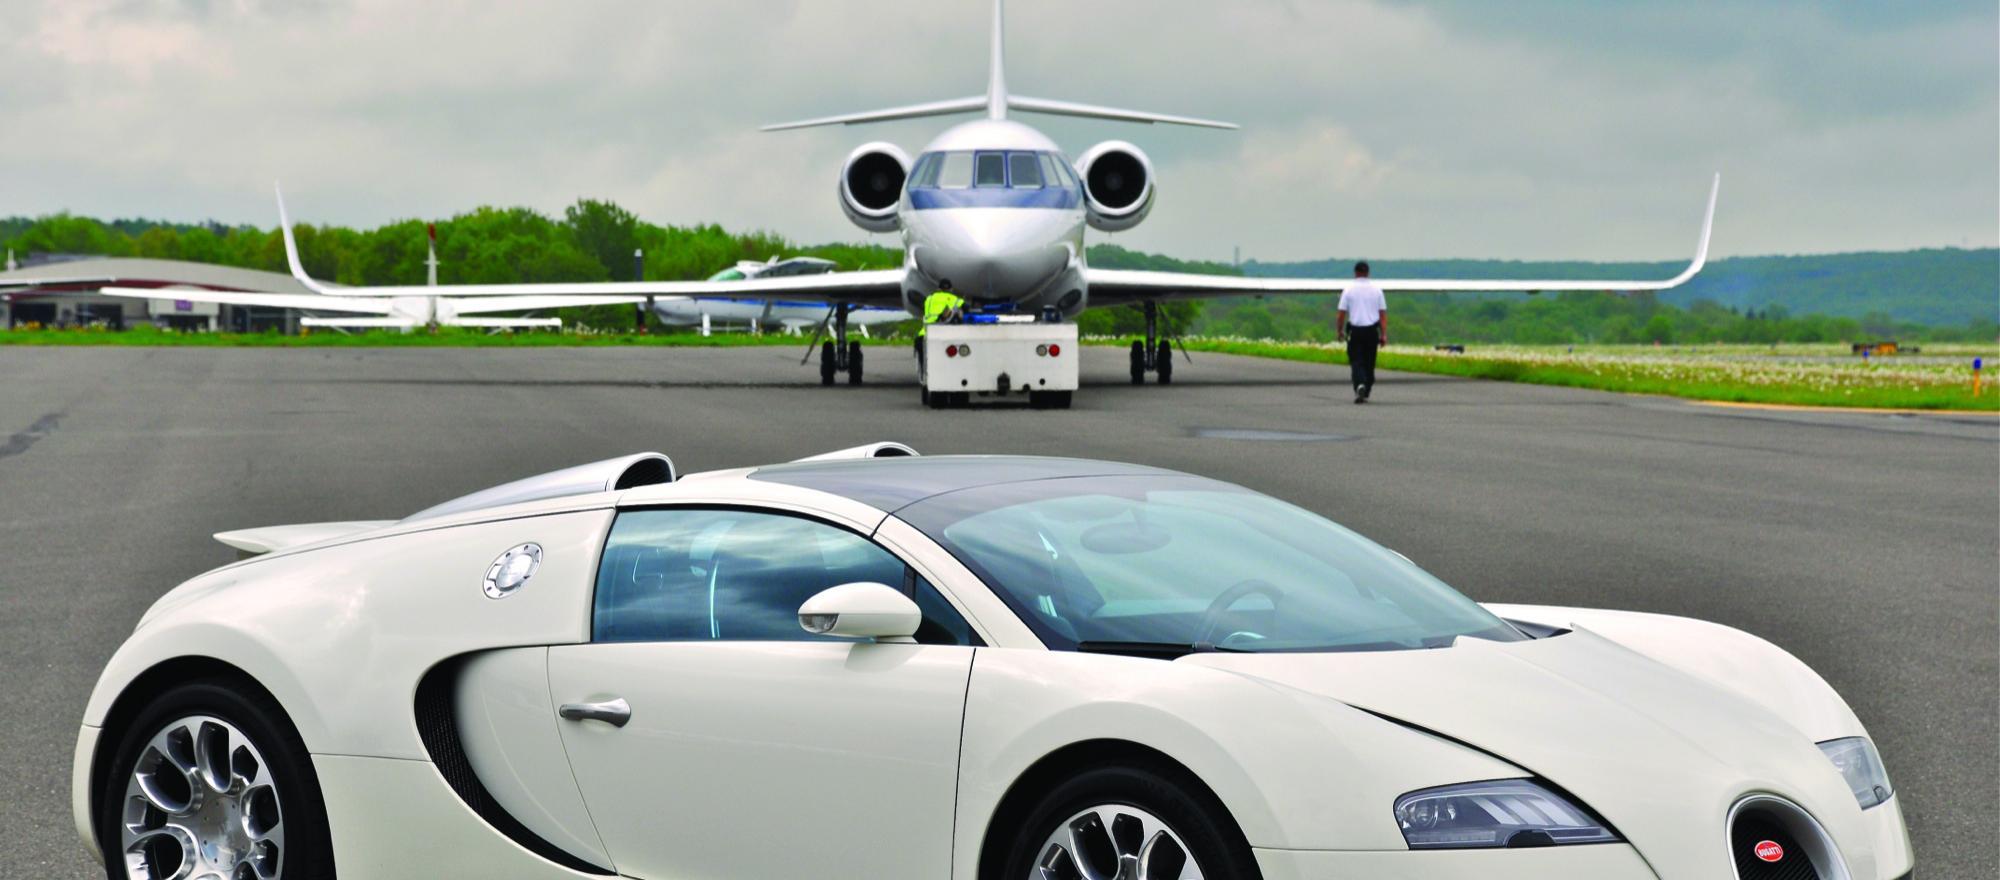 Enterpriseexotic Cars Logo - Drive Your Dream Car | Business Jet Traveler